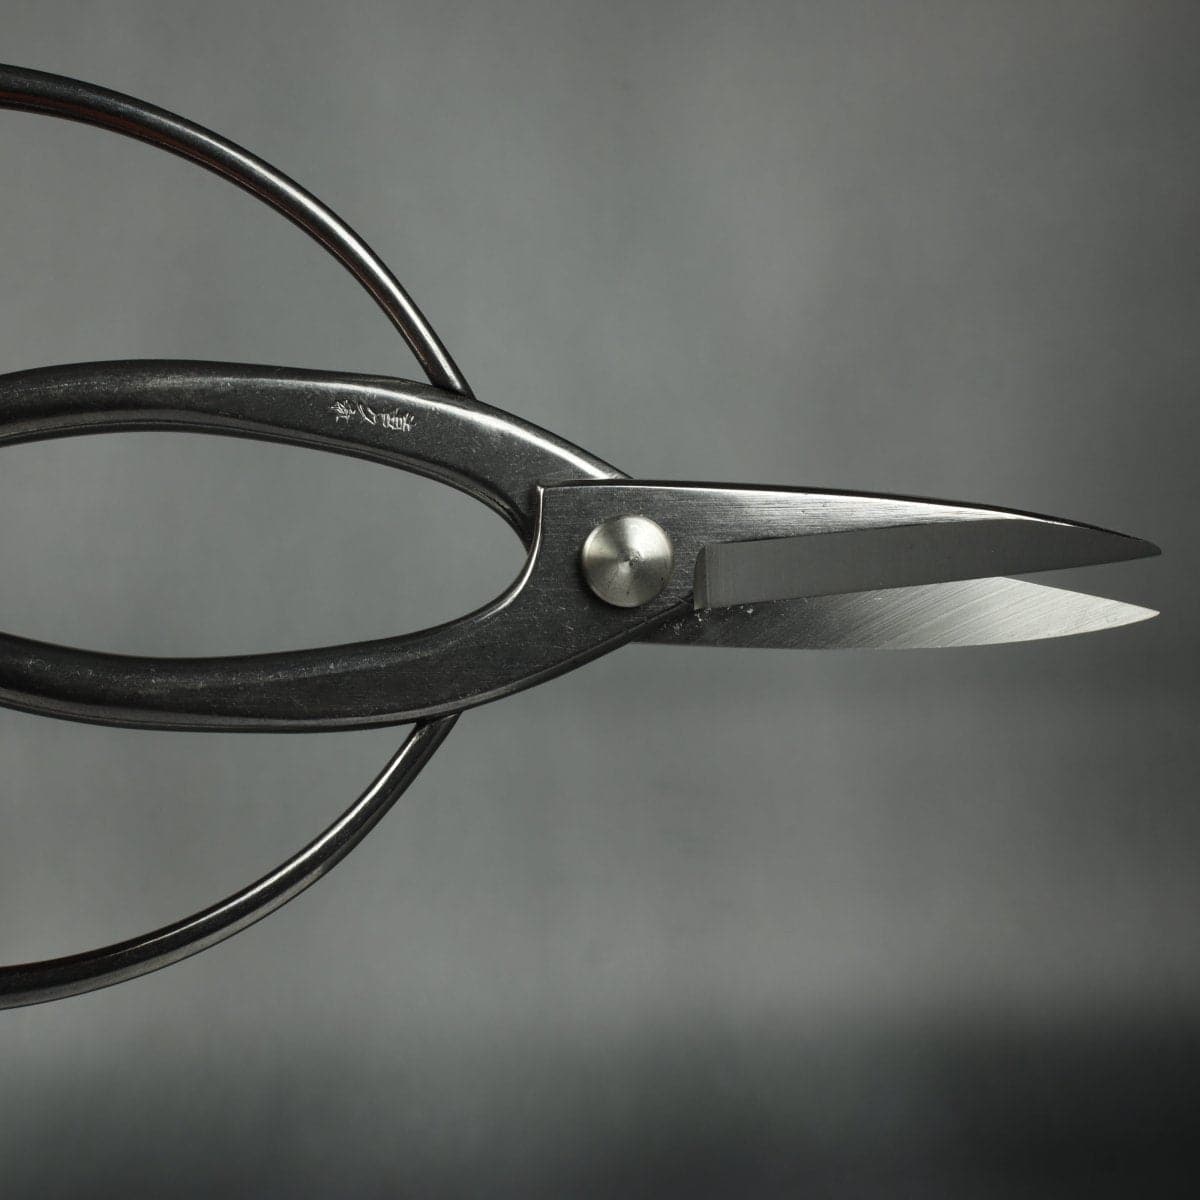 180mm Stainless Steel Bonsai Root Scissors open blades